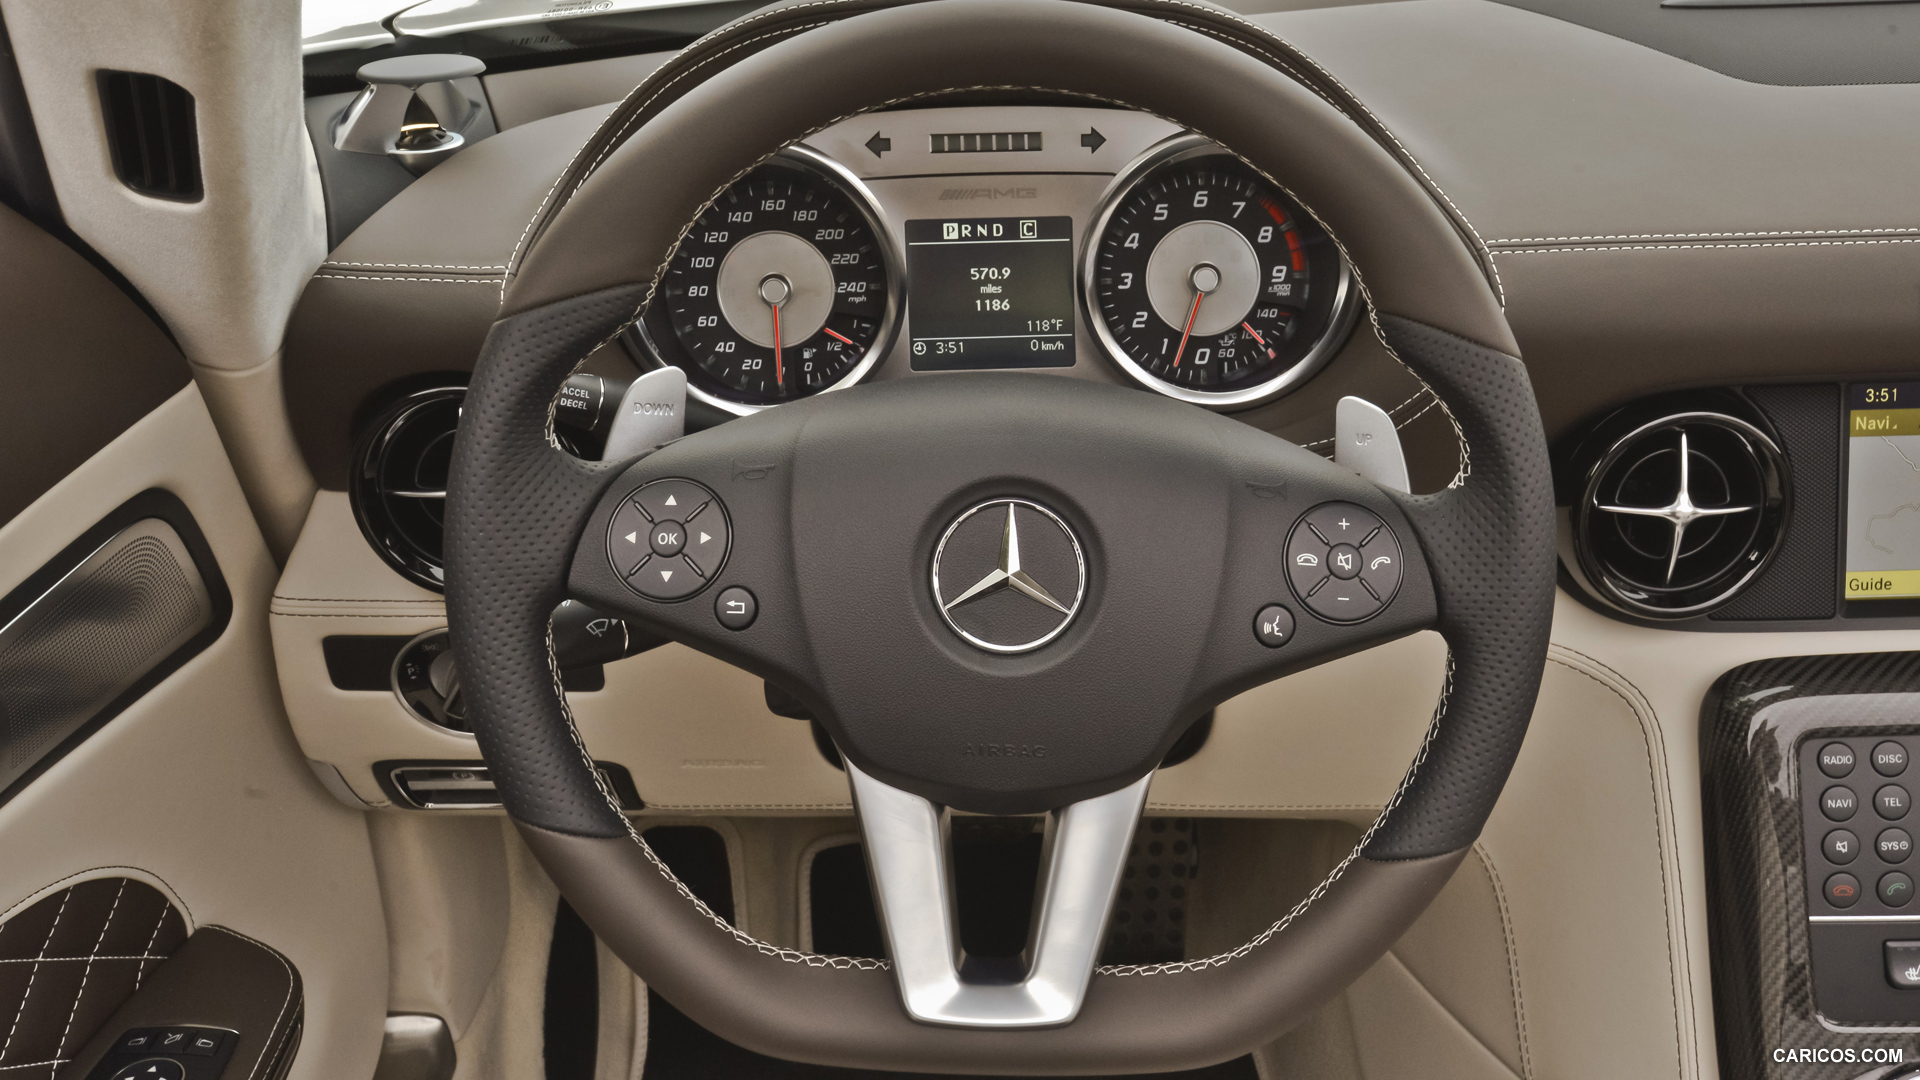 2013 Mercedes-Benz SLS AMG GT Roadster designo Mystic White  - Interior, #156 of 208